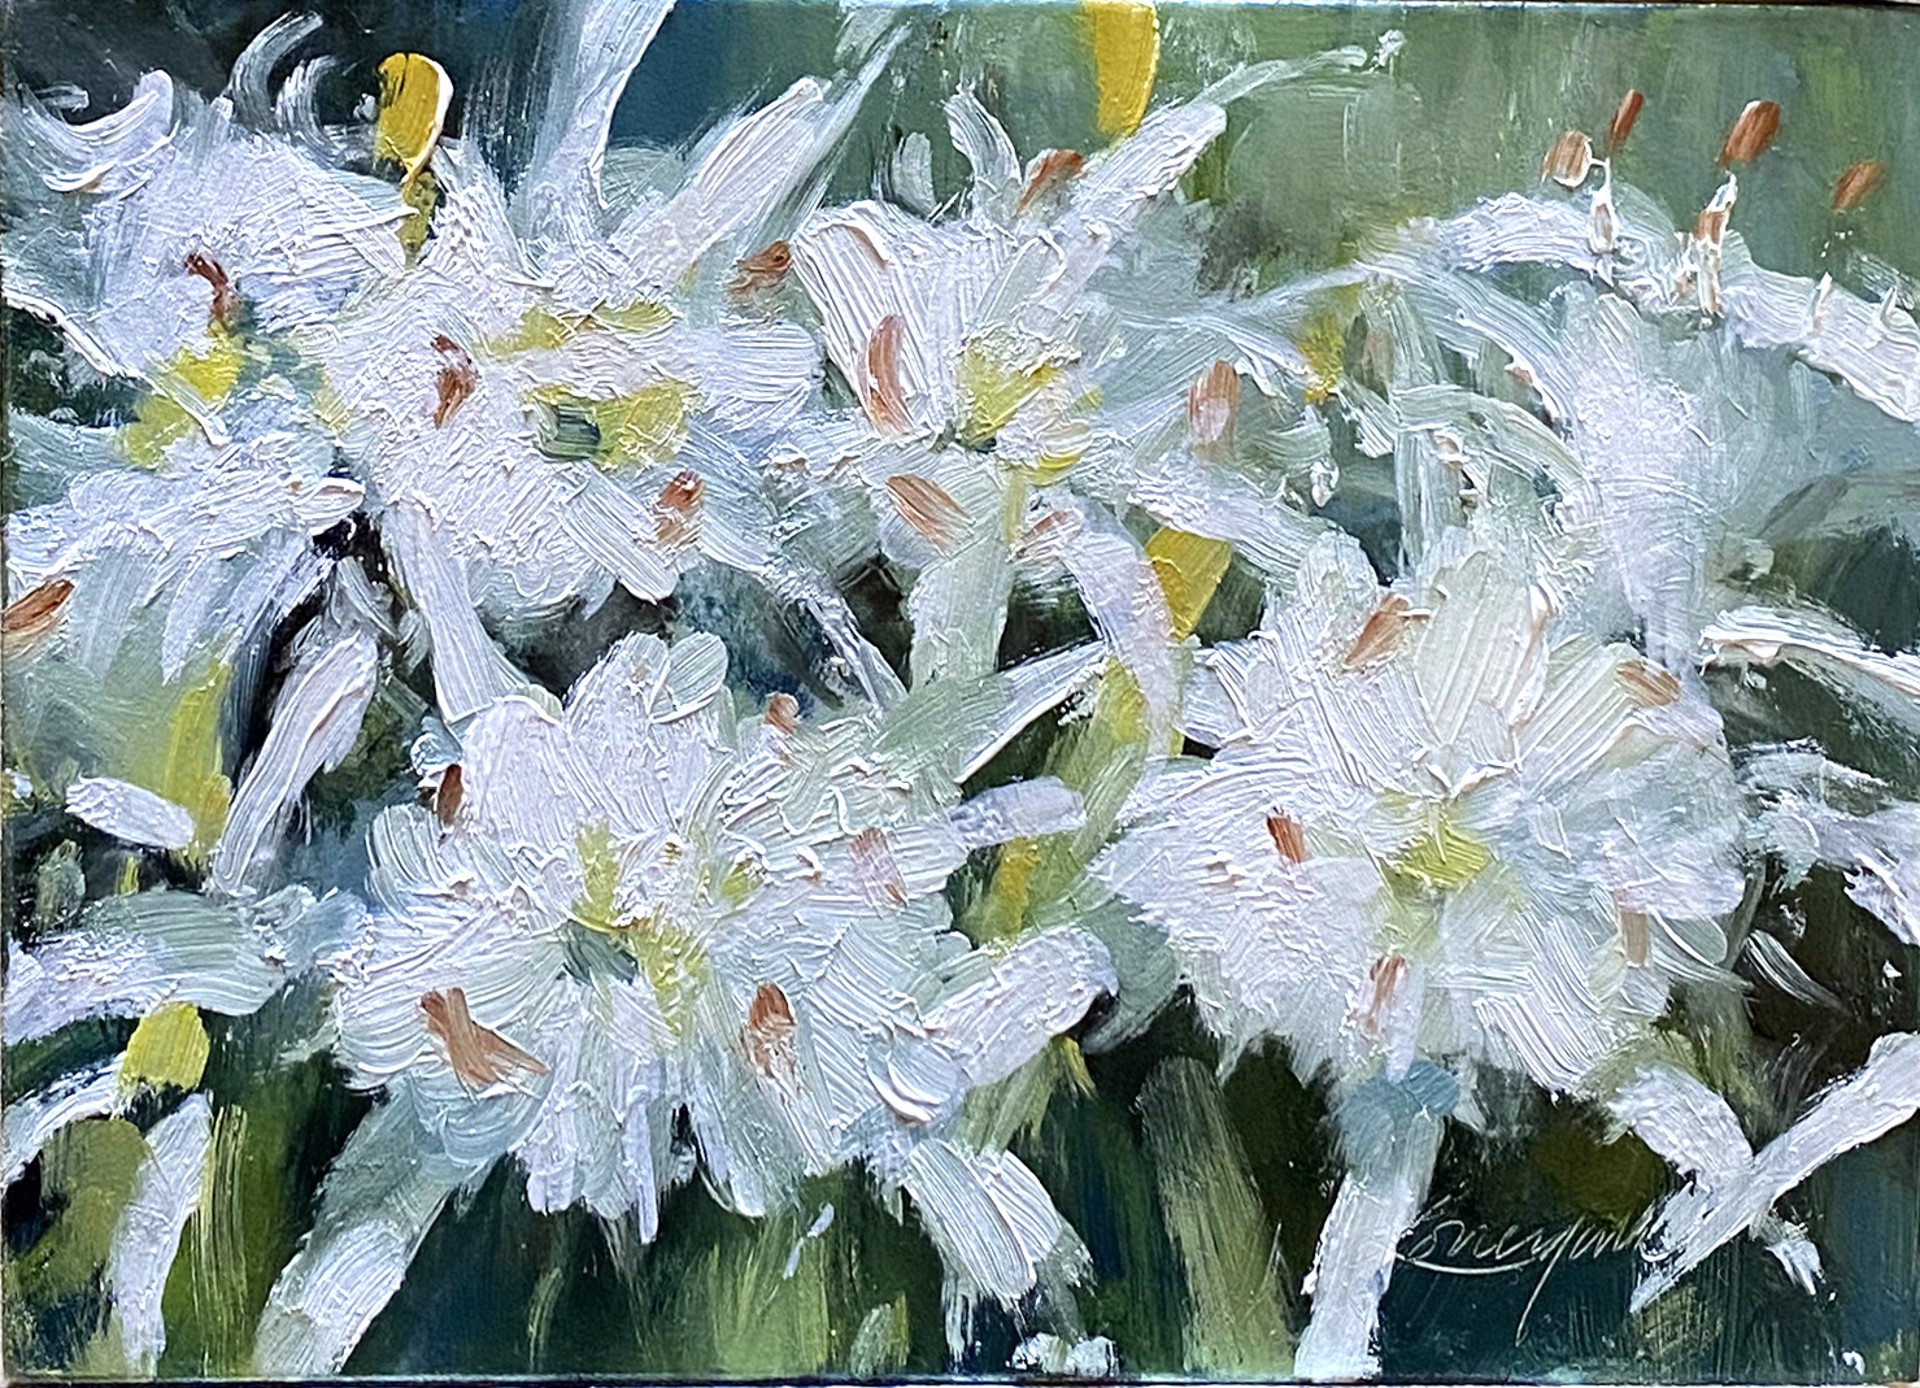 Lilies for Sam by John Lonergan